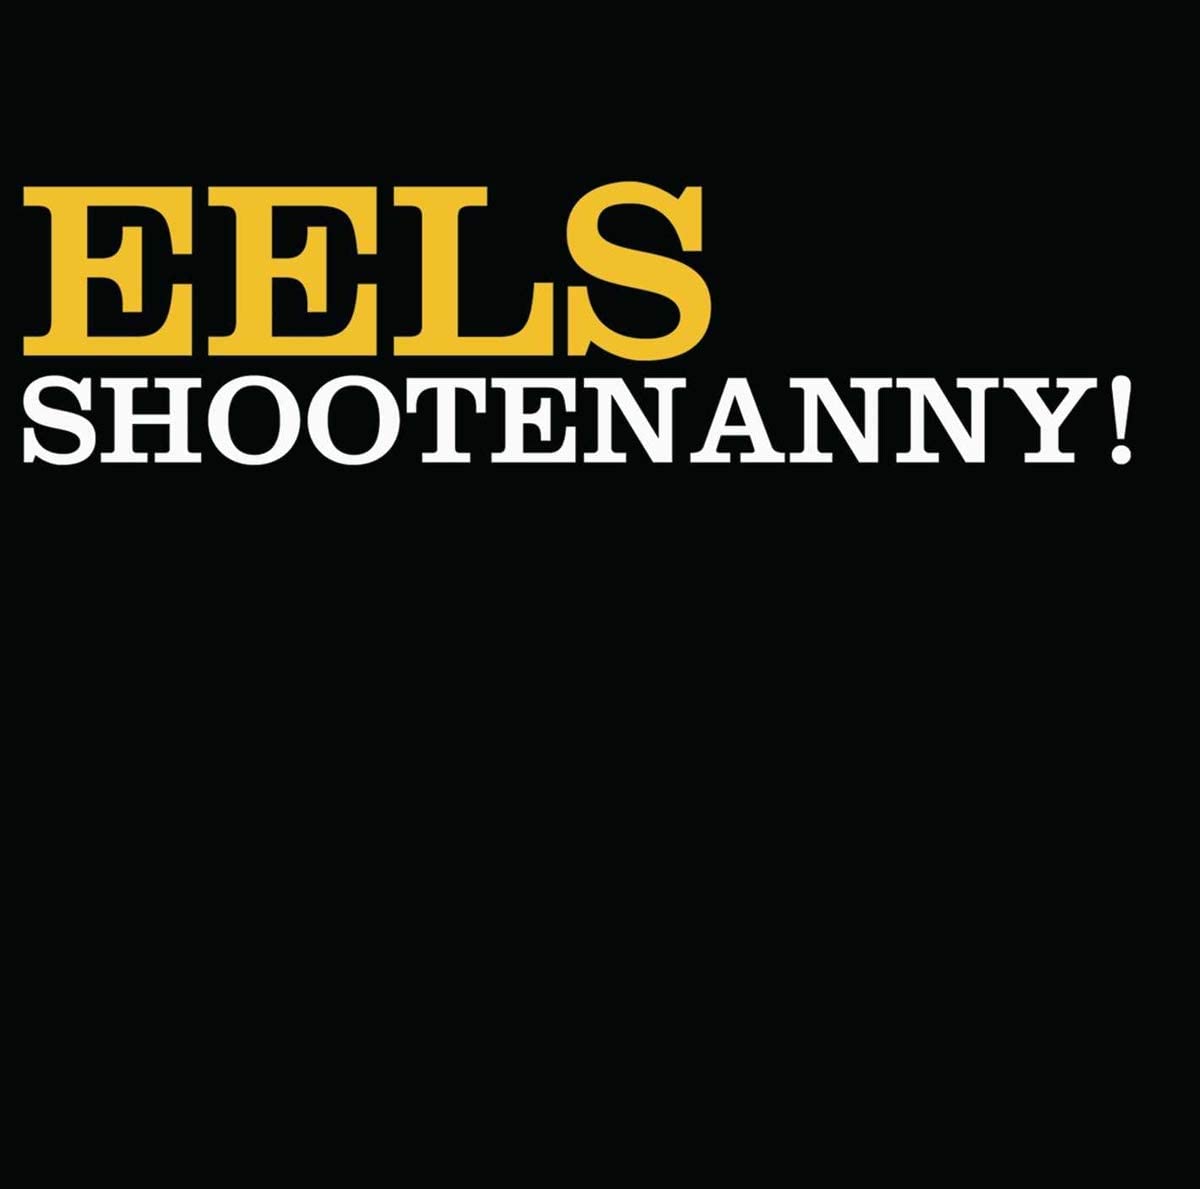 Eels - Shootenanny! -USED CD